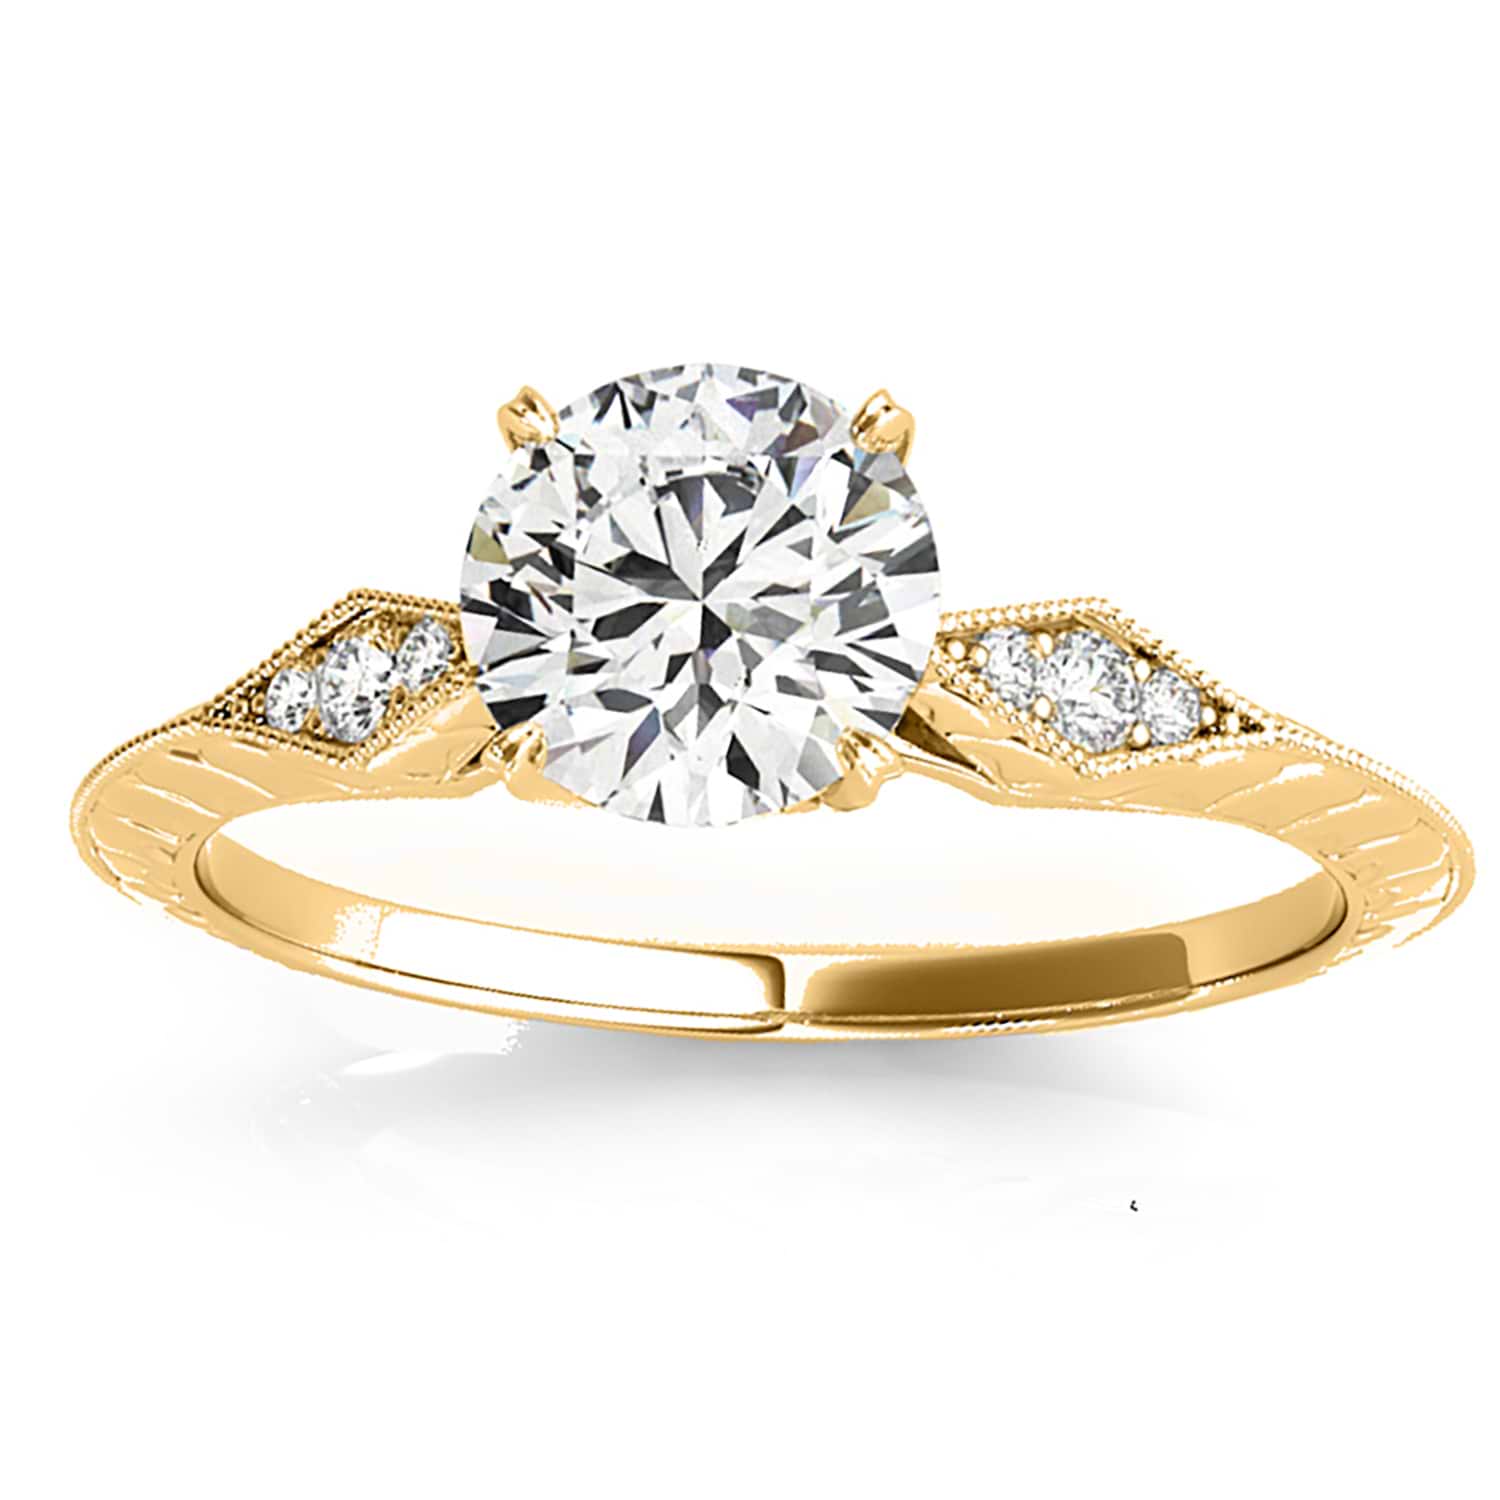 Diamond Accented Sidestone Engagement Ring Setting 18k Yellow Gold (0.26ct)